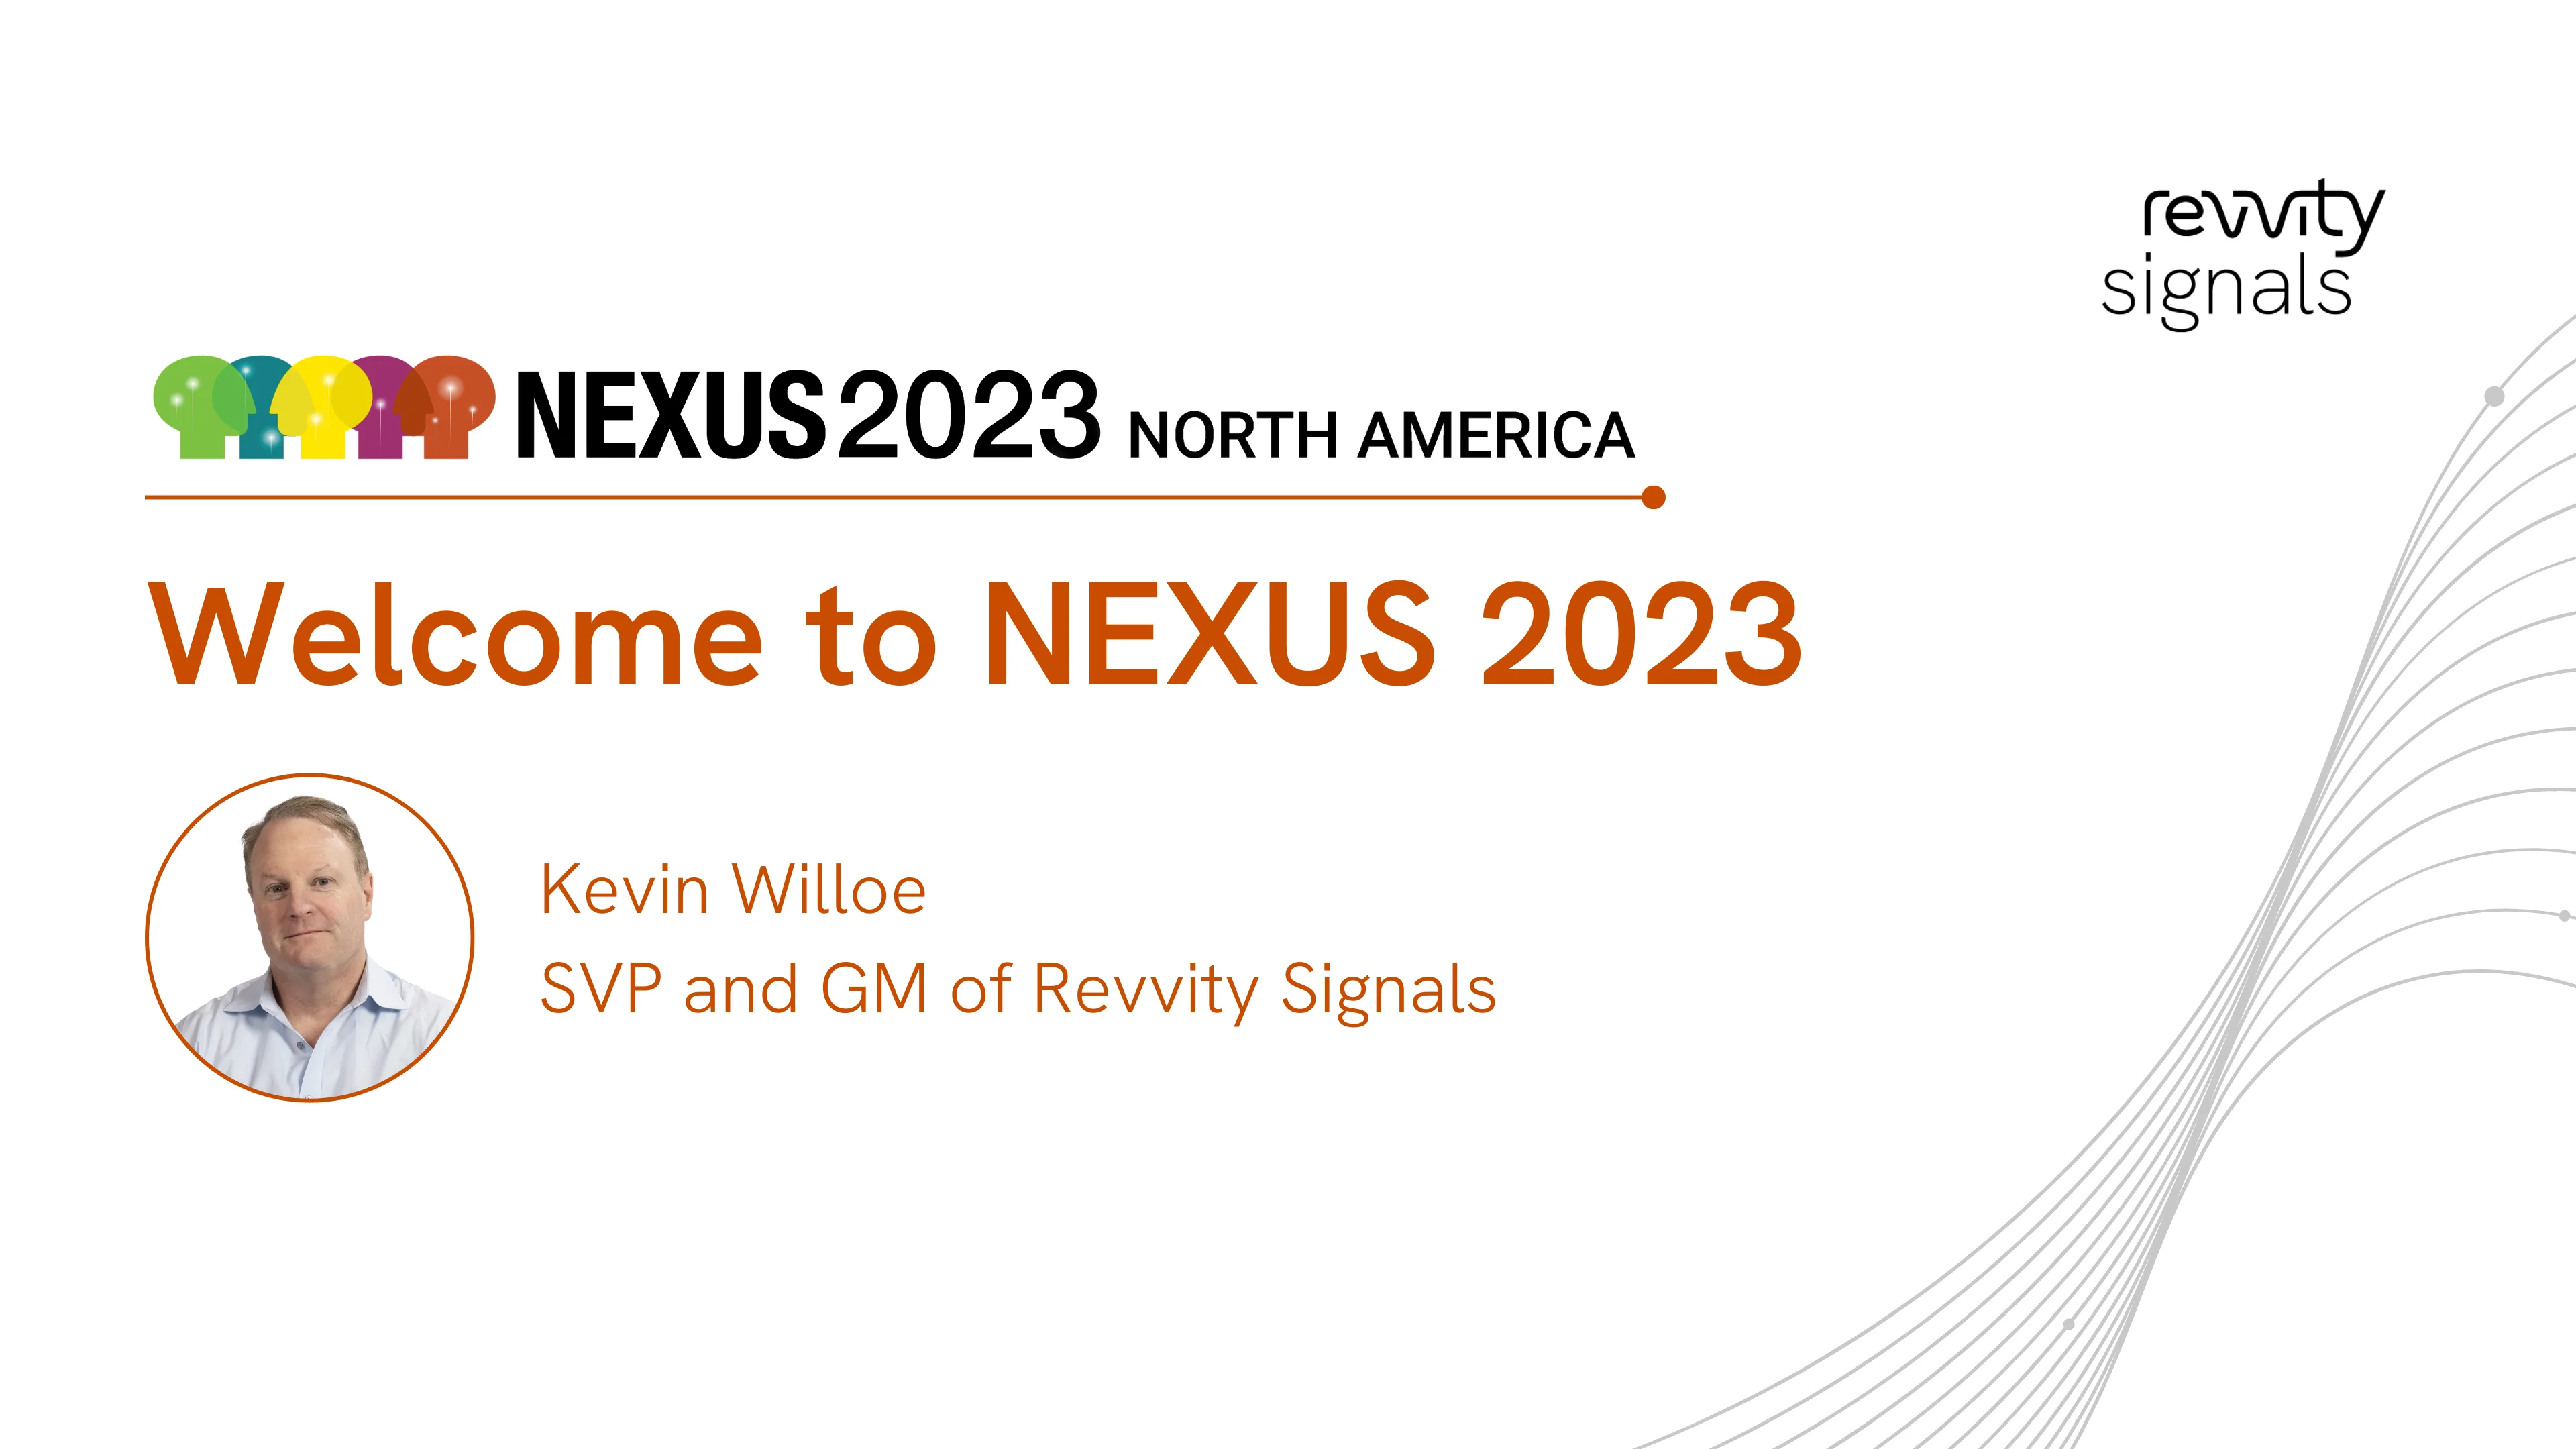 Watch Day 1, NA NEXUS 2023 - Welcome to NEXUS 2023 on Vimeo.